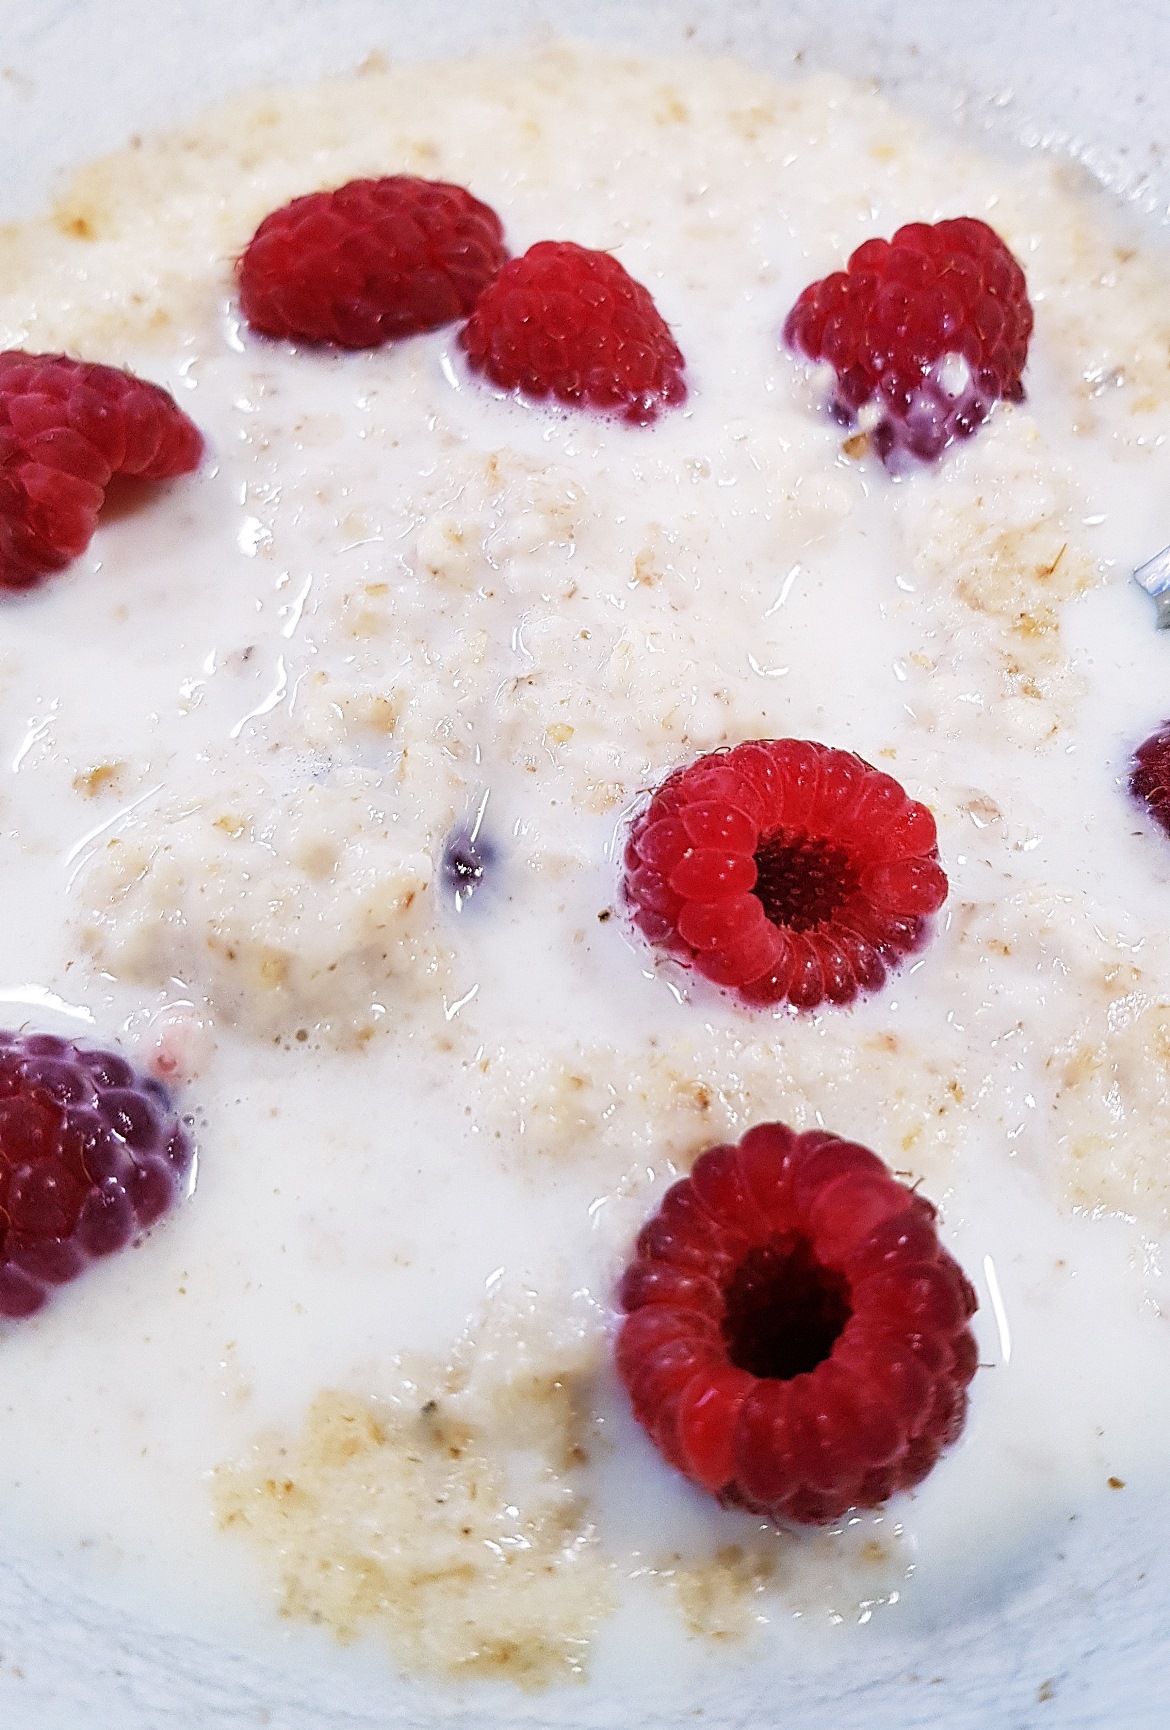 Raspberries and porridge - April 2018 Monthly Recap by BeckyBecky Blogs